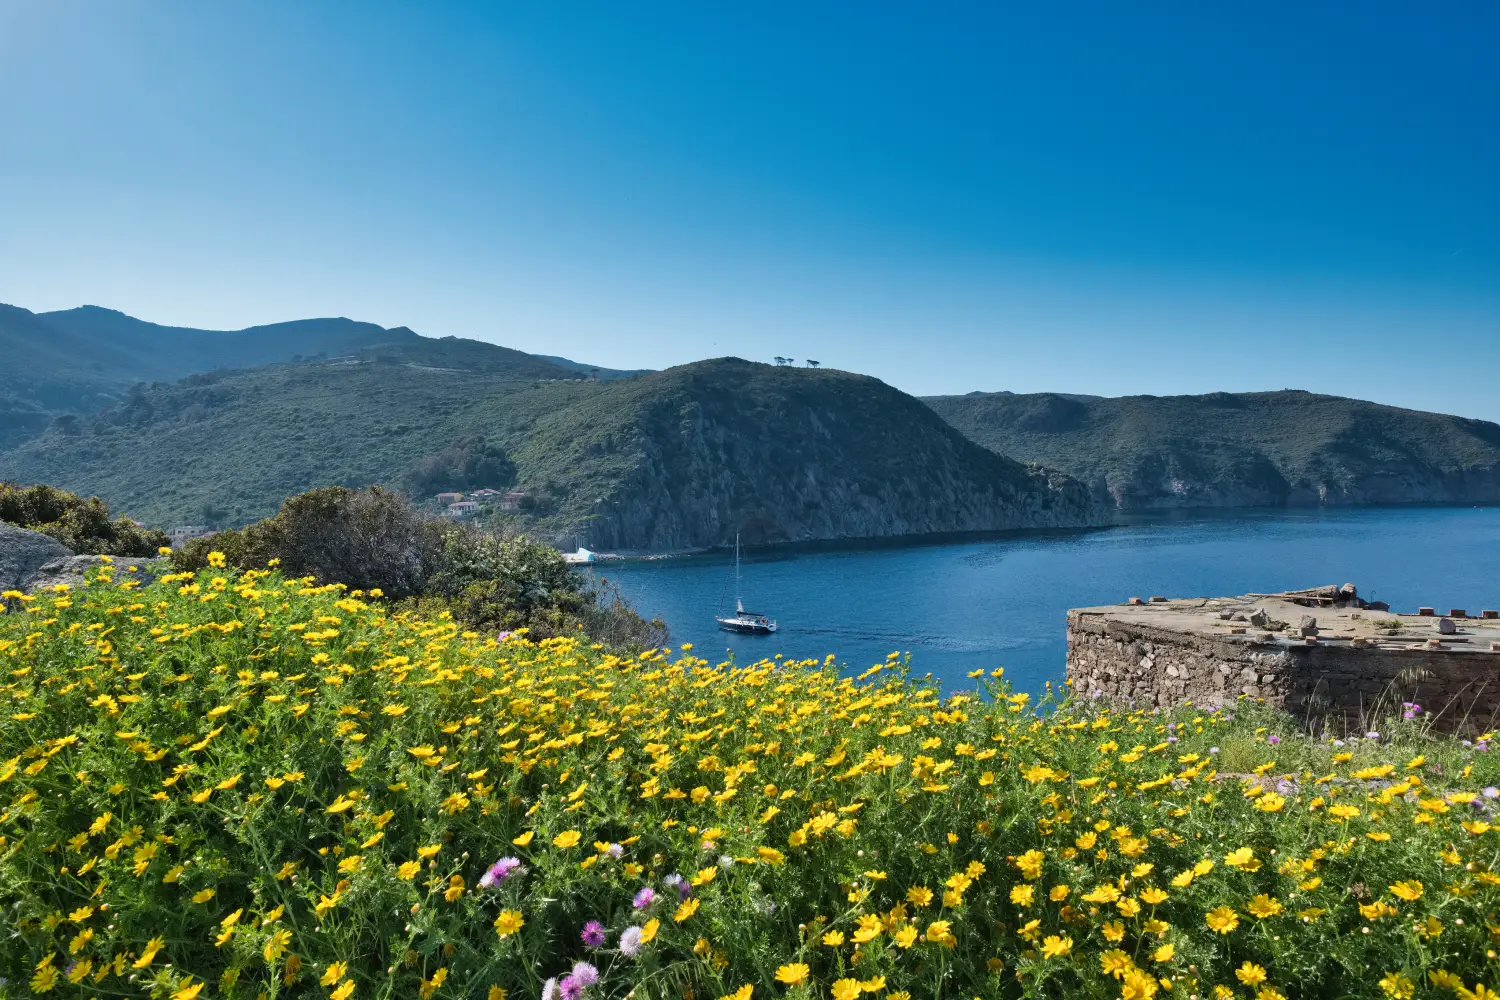 Ferry to Capraia - Panorama from the island of Capraia Tuscan Archipelago Italy.